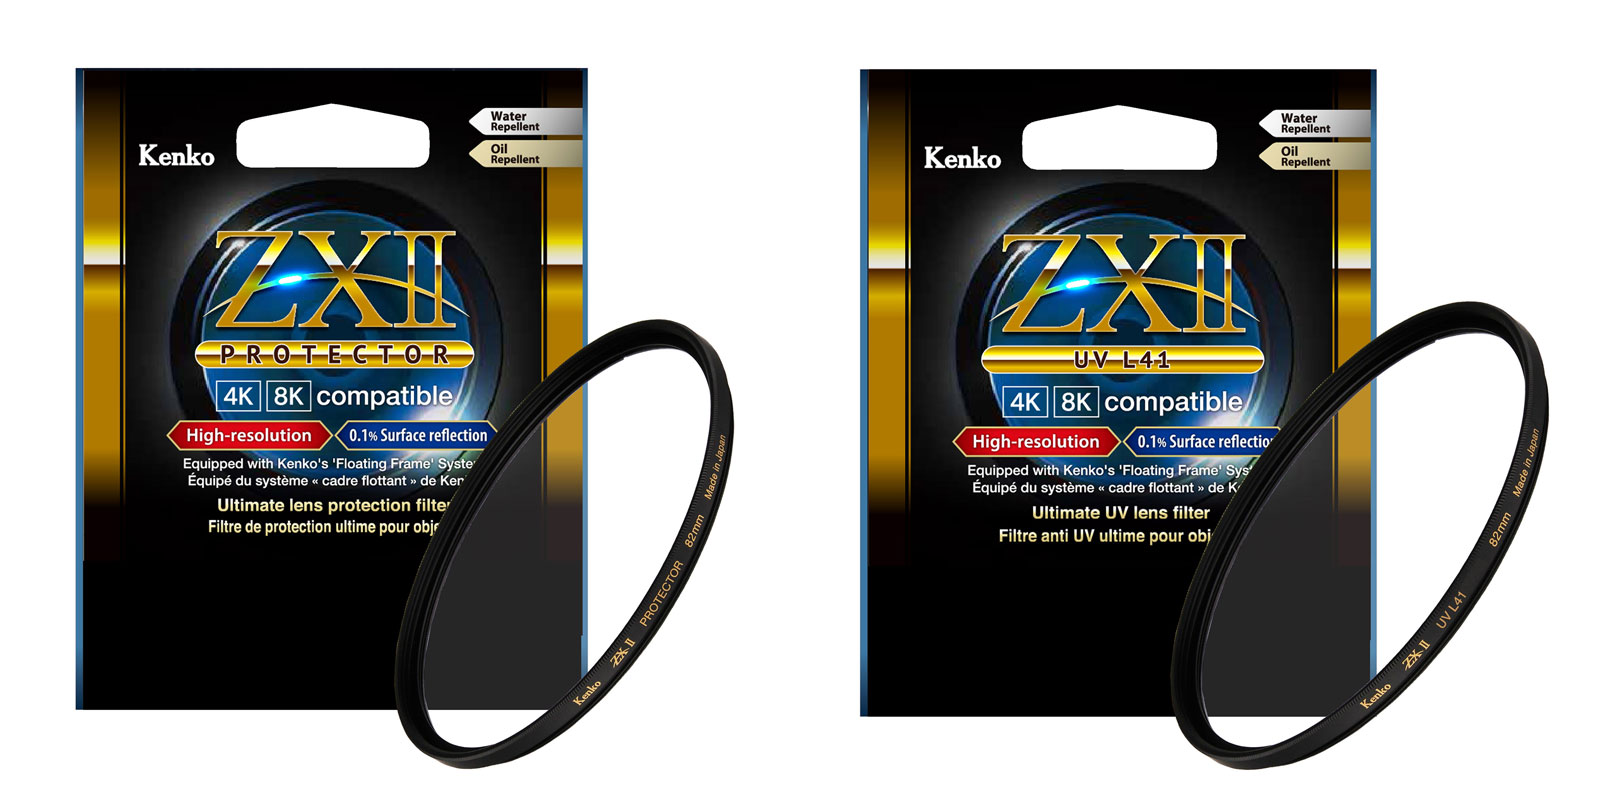 Kenko Global - New release of Kenko ZXII PROTECTOR and ZXII UV L41 